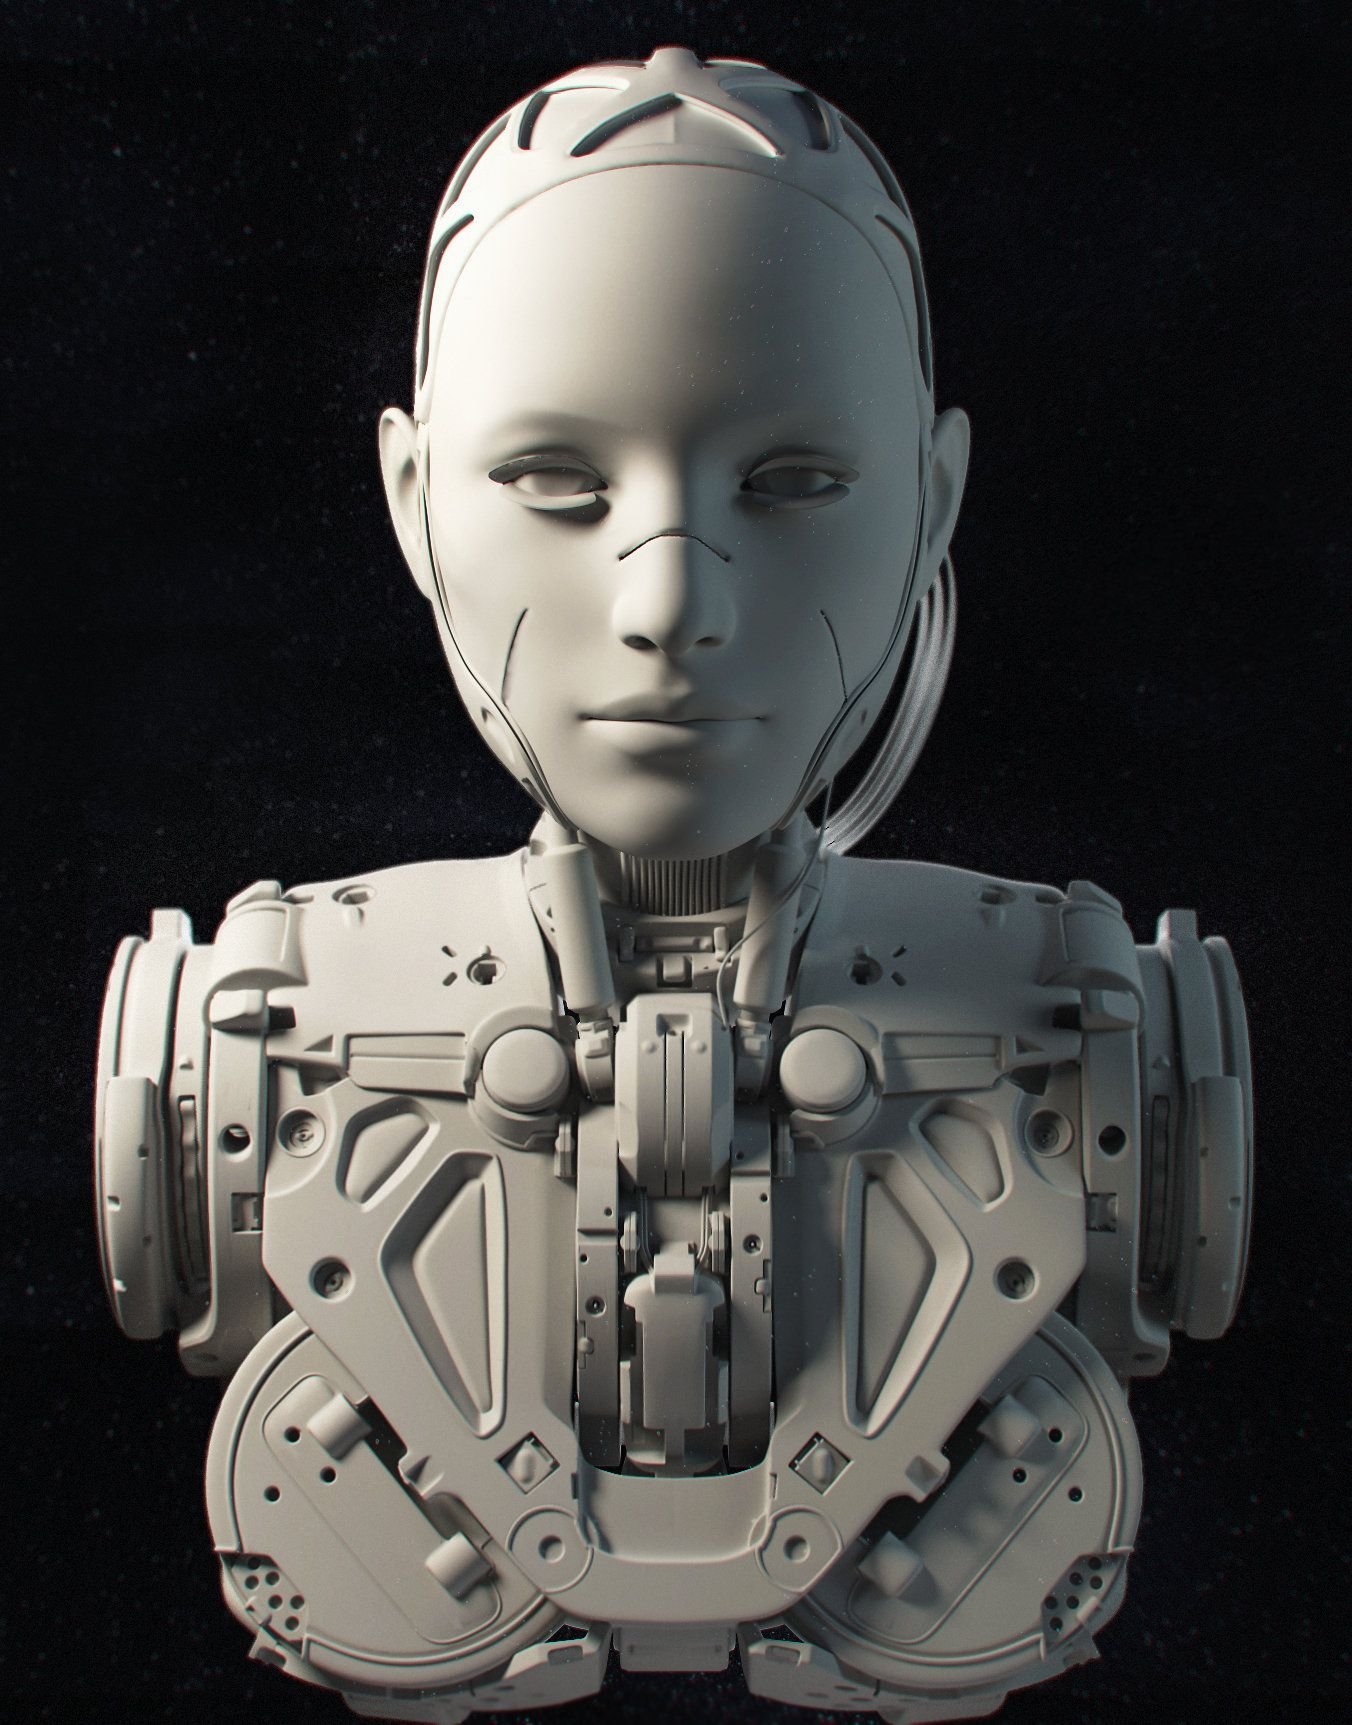 Ии арт. Искин Cyberpunk. Киборг робот киберпанк. Человека робот киборг биоробот. Искусственный интеллект.